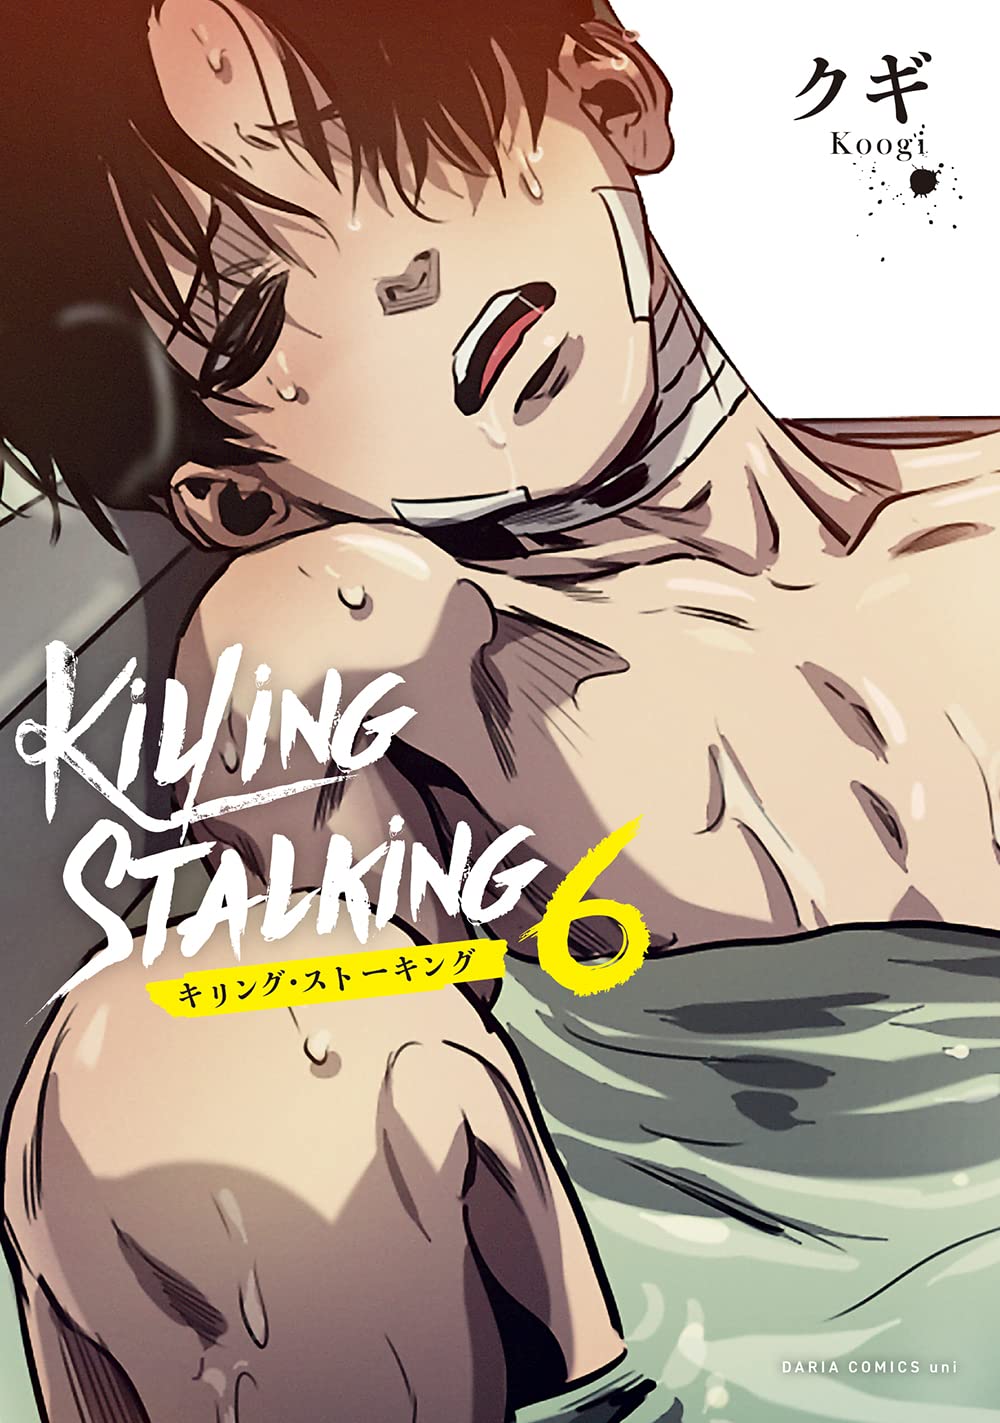 Killing Stalking: Deluxe Edition Vol. 3|Paperback